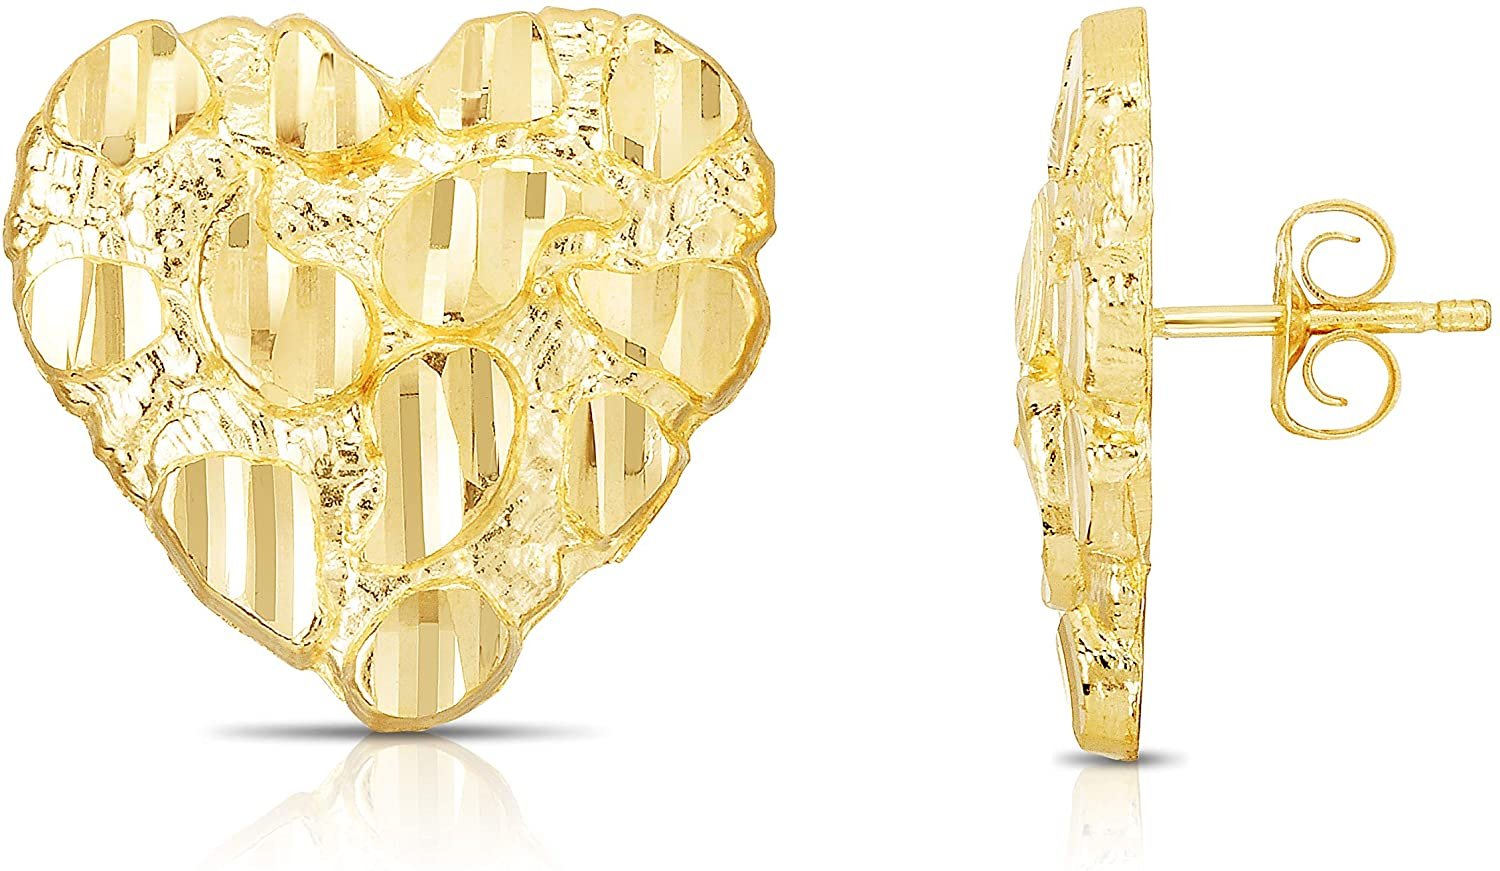 Floreo 10k Yellow Gold Heart Shape Shiny Nugget Earrings